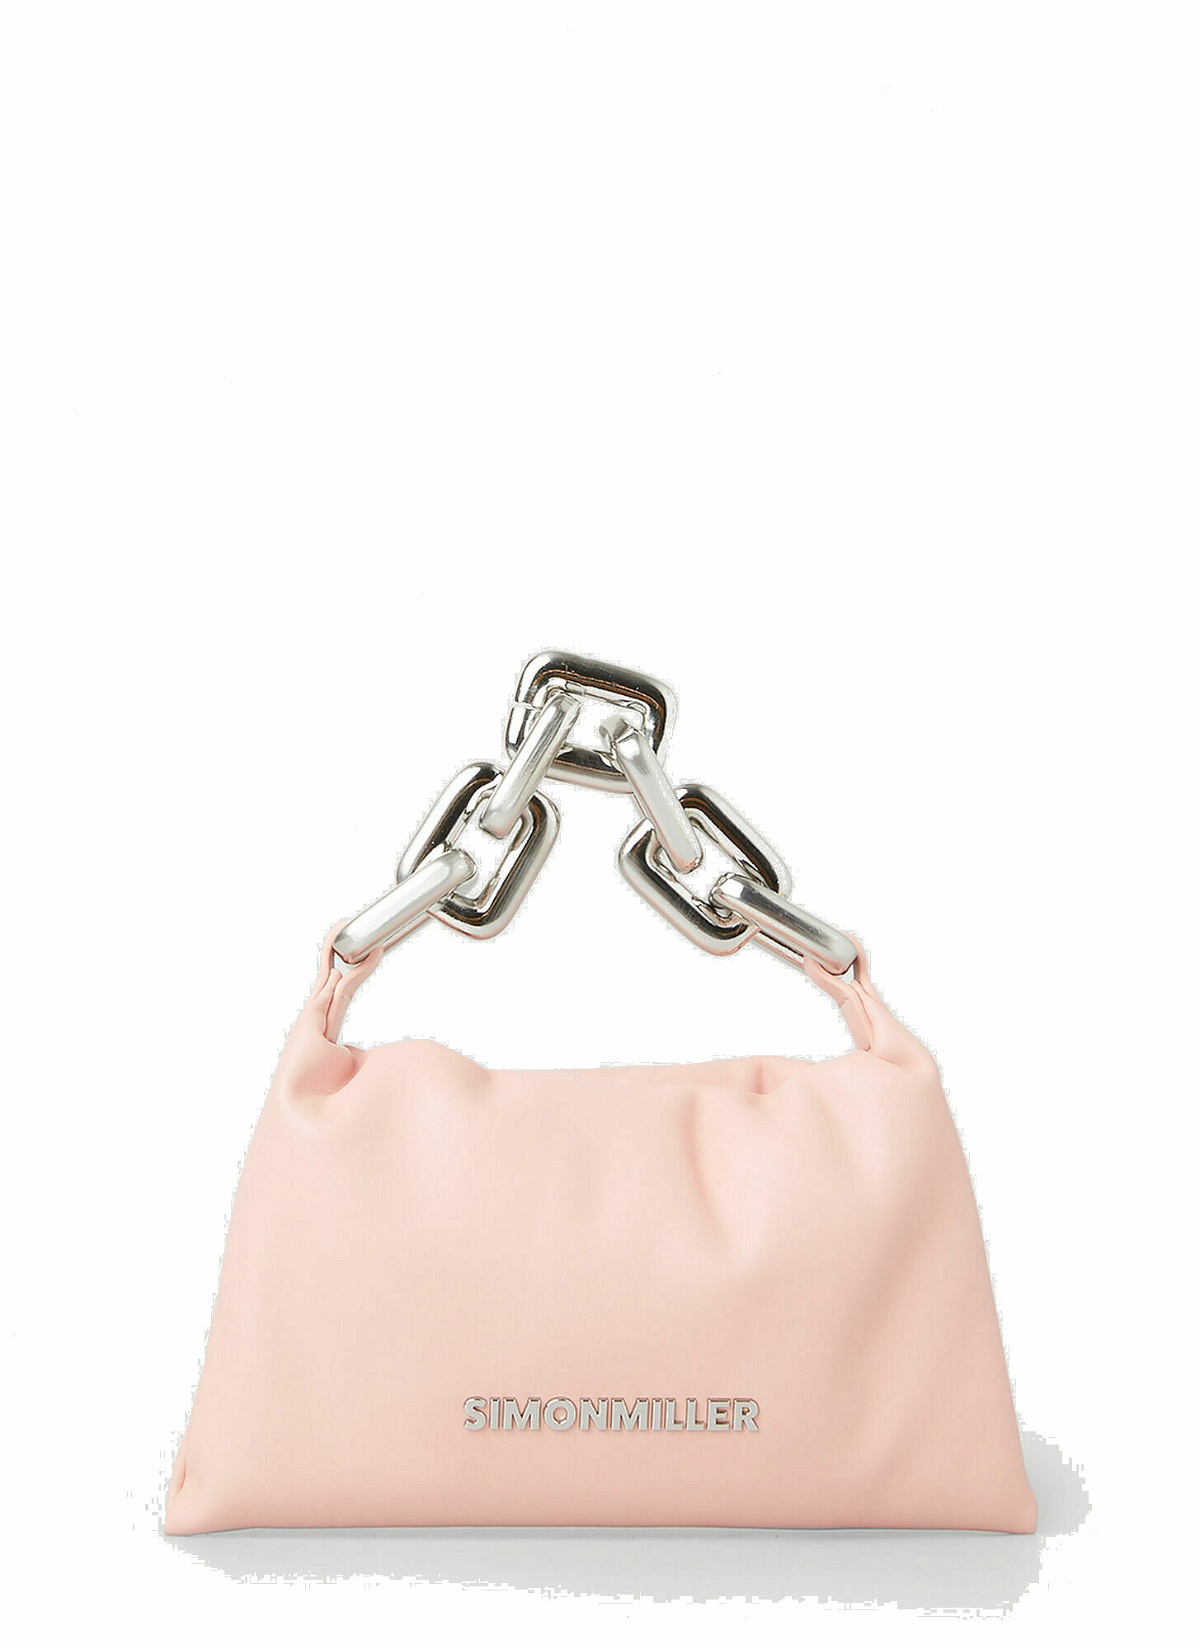 Photo: Linked Mini Puffin Handbag in Pink